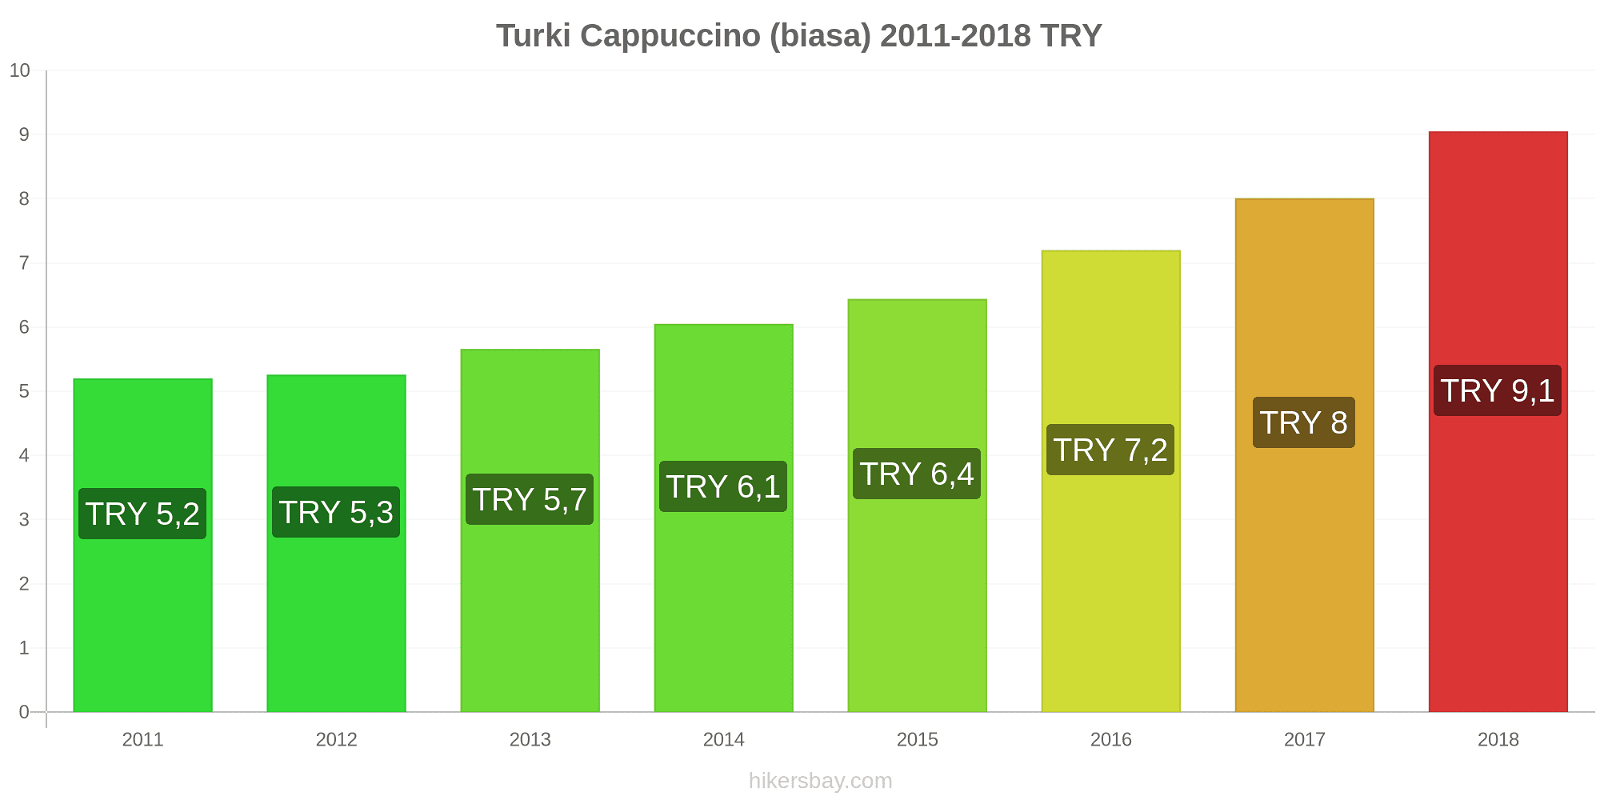 Turki perubahan harga Cappuccino hikersbay.com